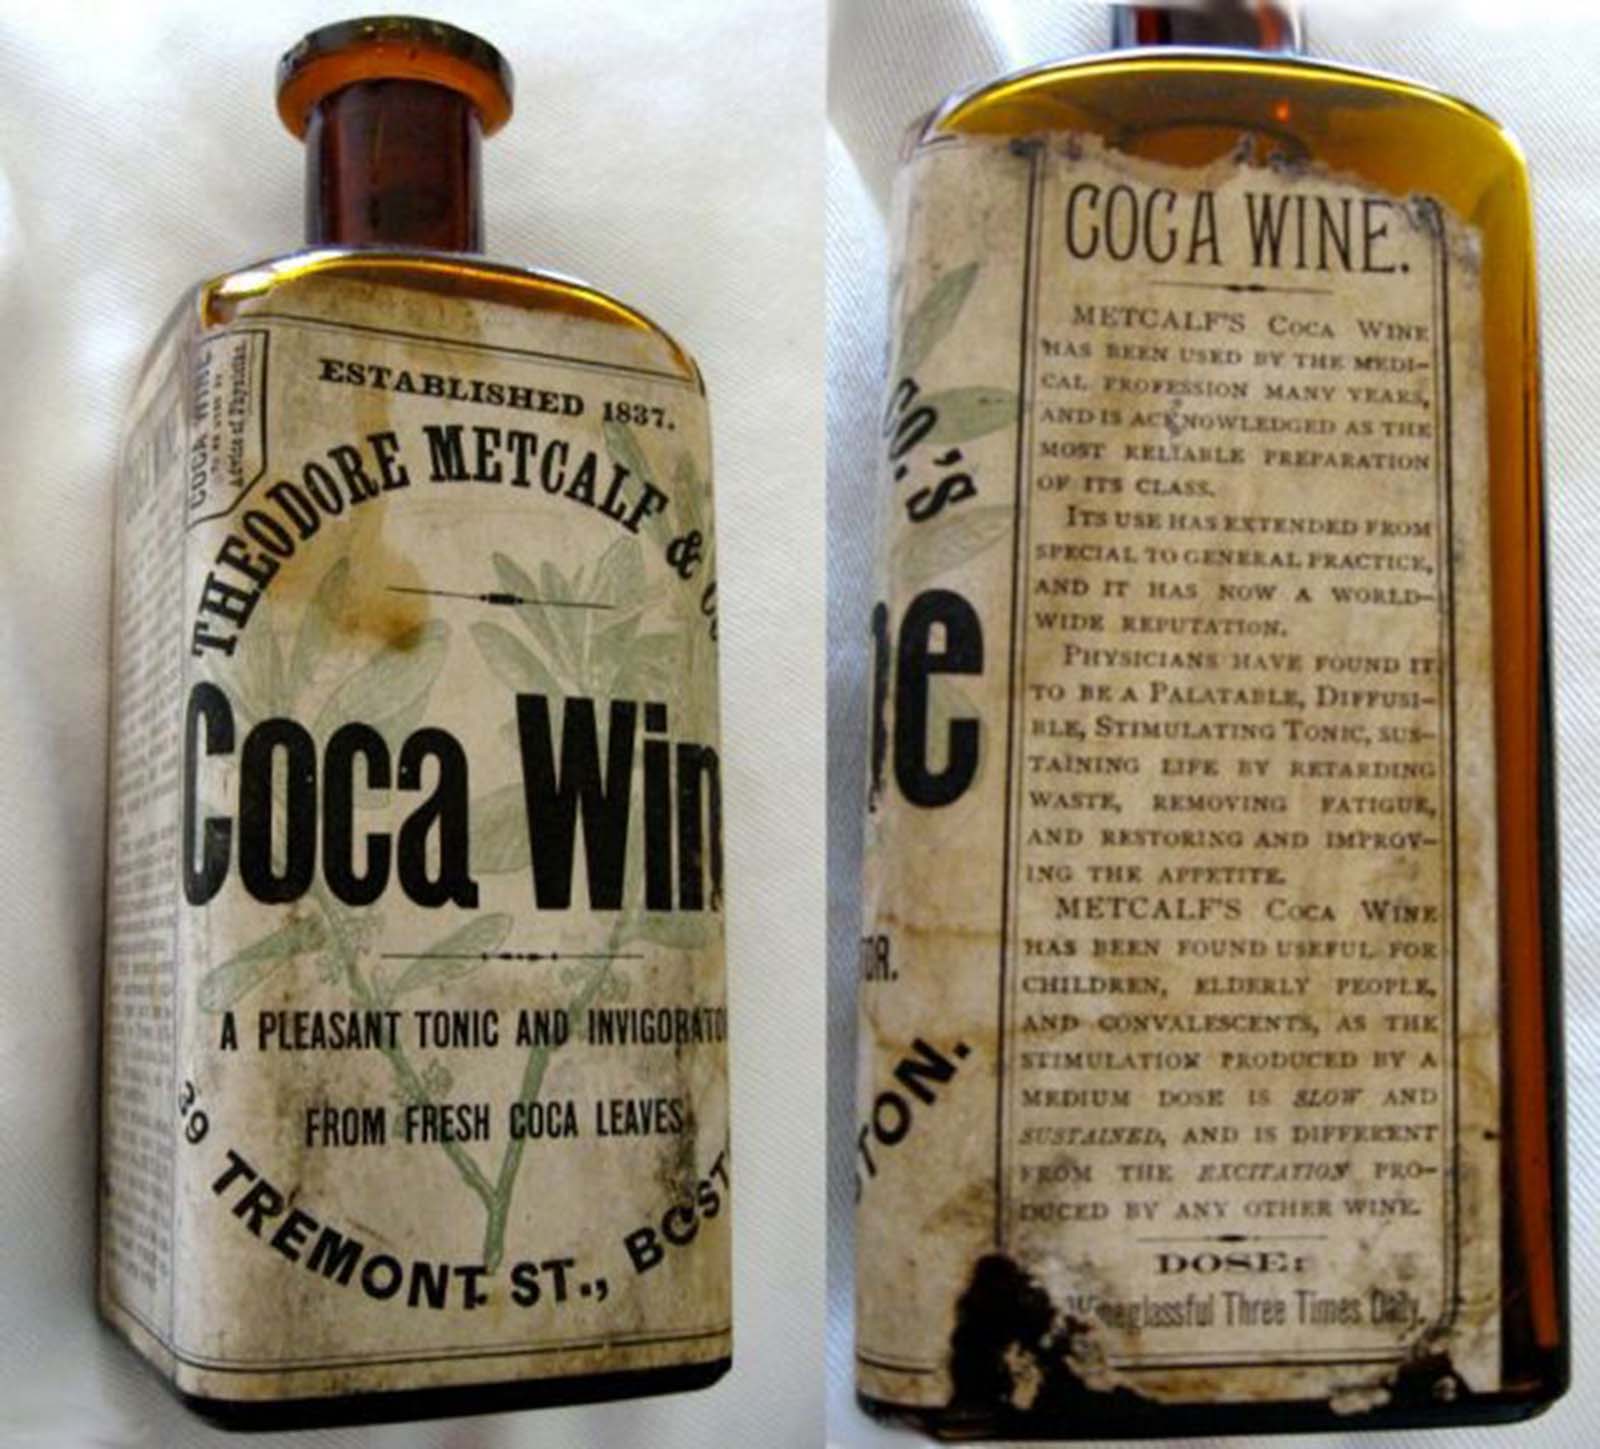 Theodore Metcalf’s coca wine